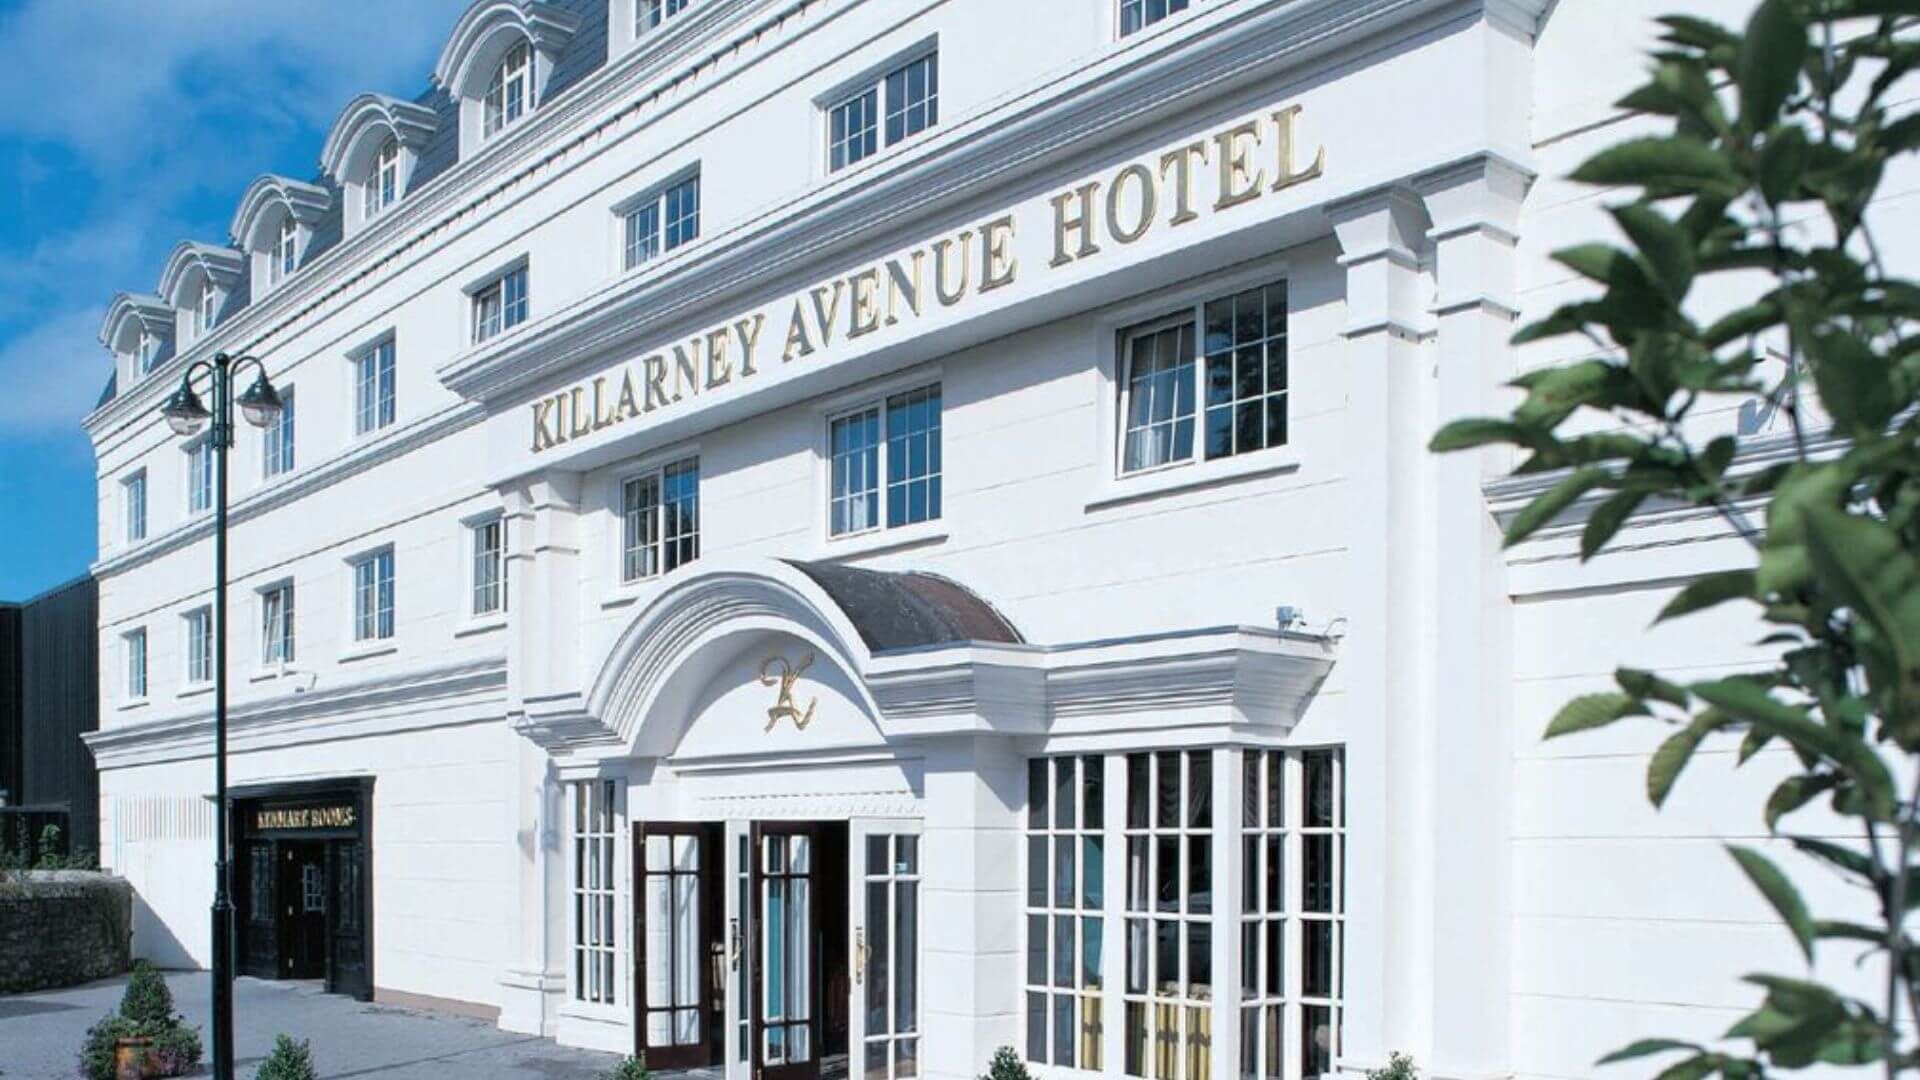 The Killarney Avenue Hotel